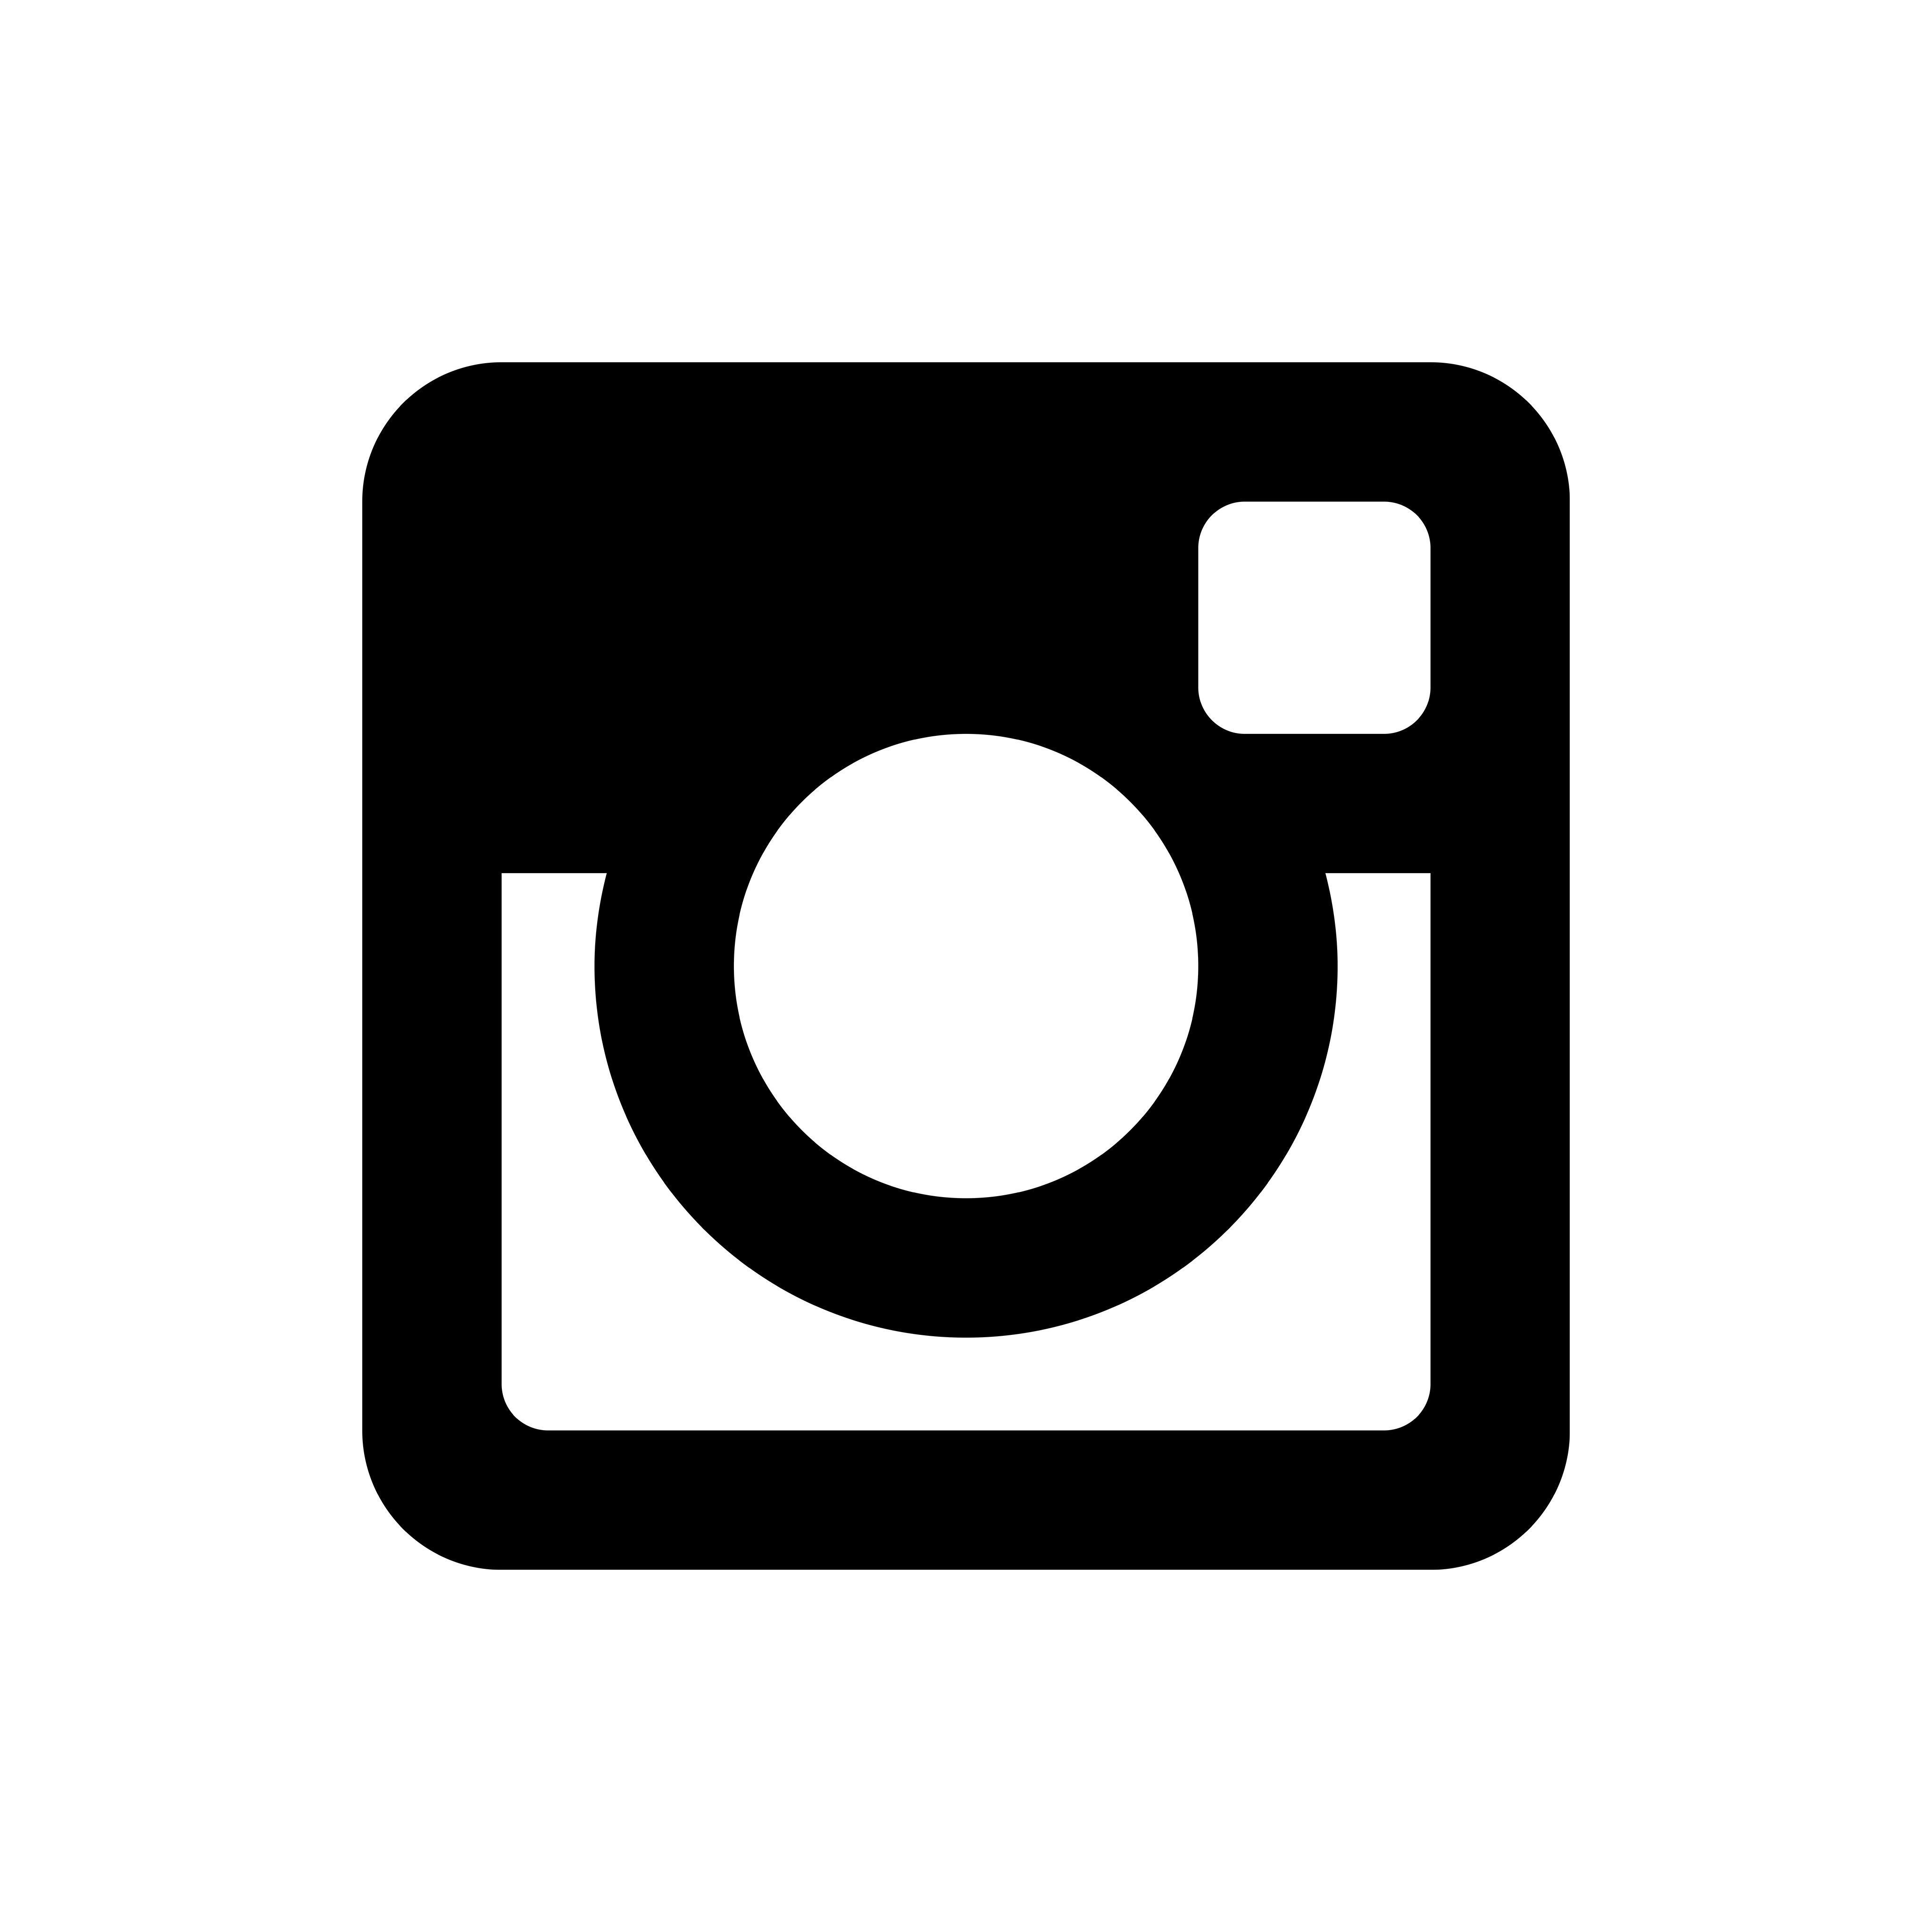 Large Instagram Logo - Instagram logo printable banner freeuse library - RR collections